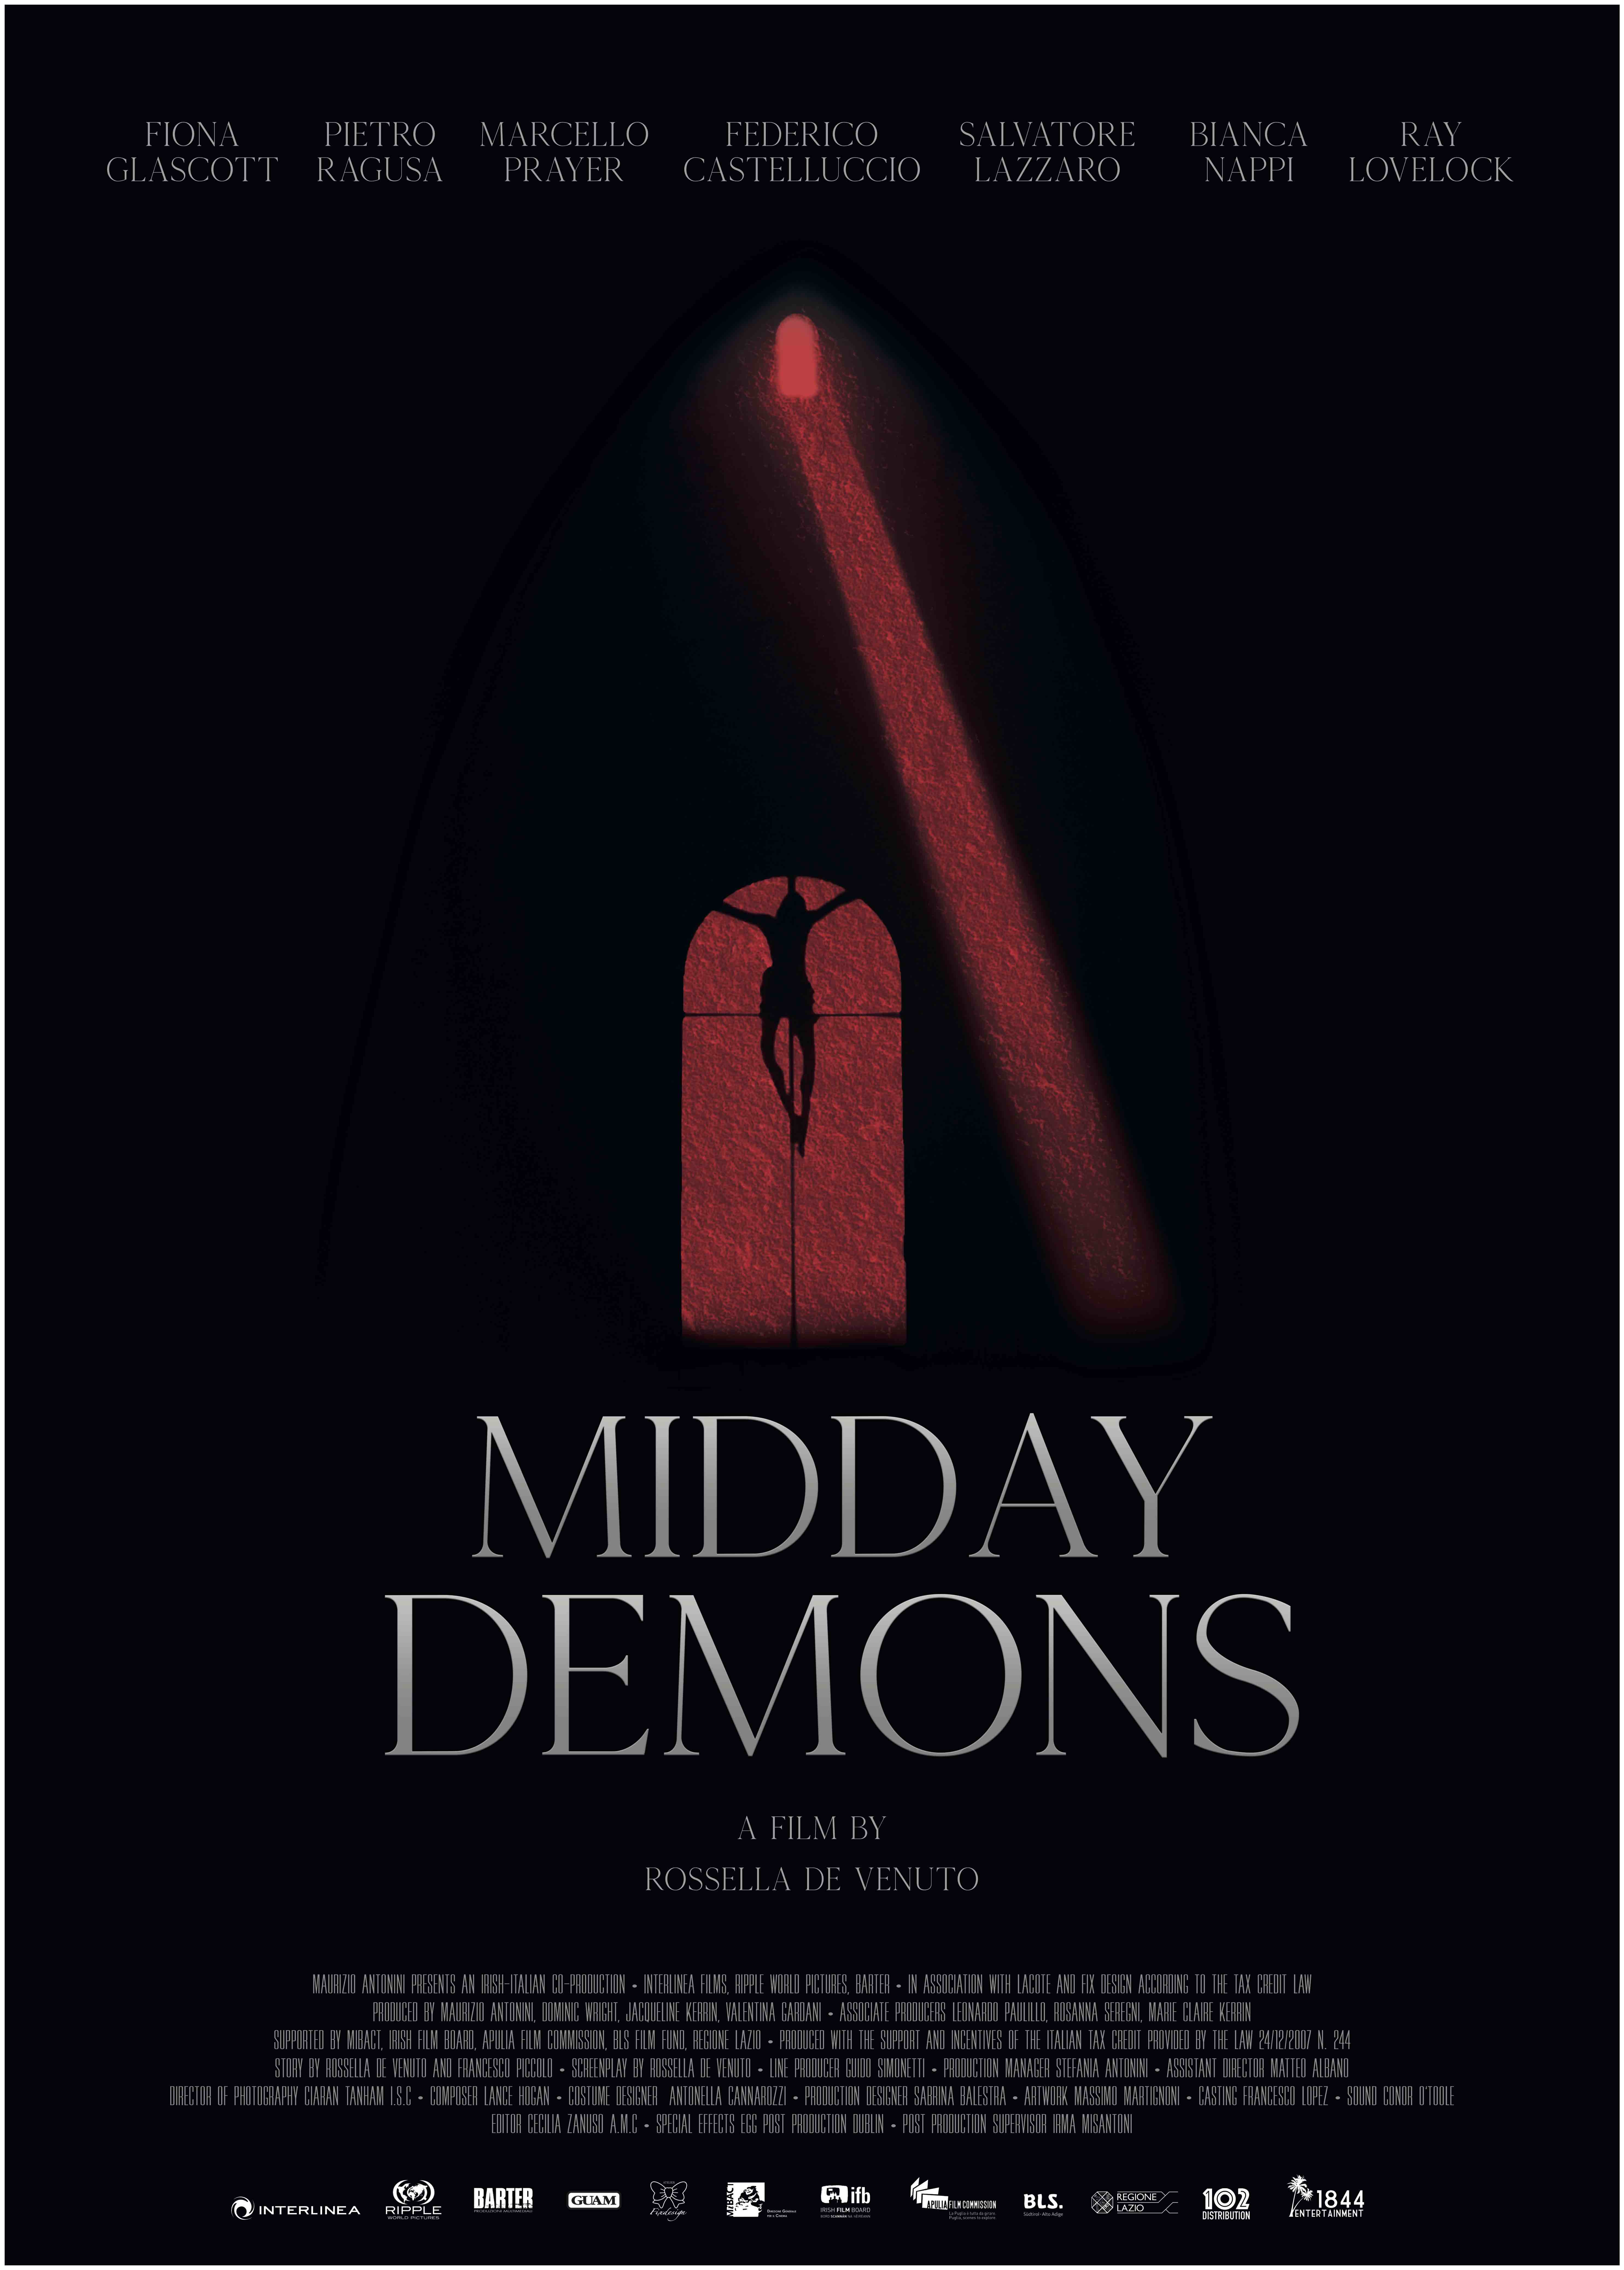 Midday Demons (2013) Screenshot 1